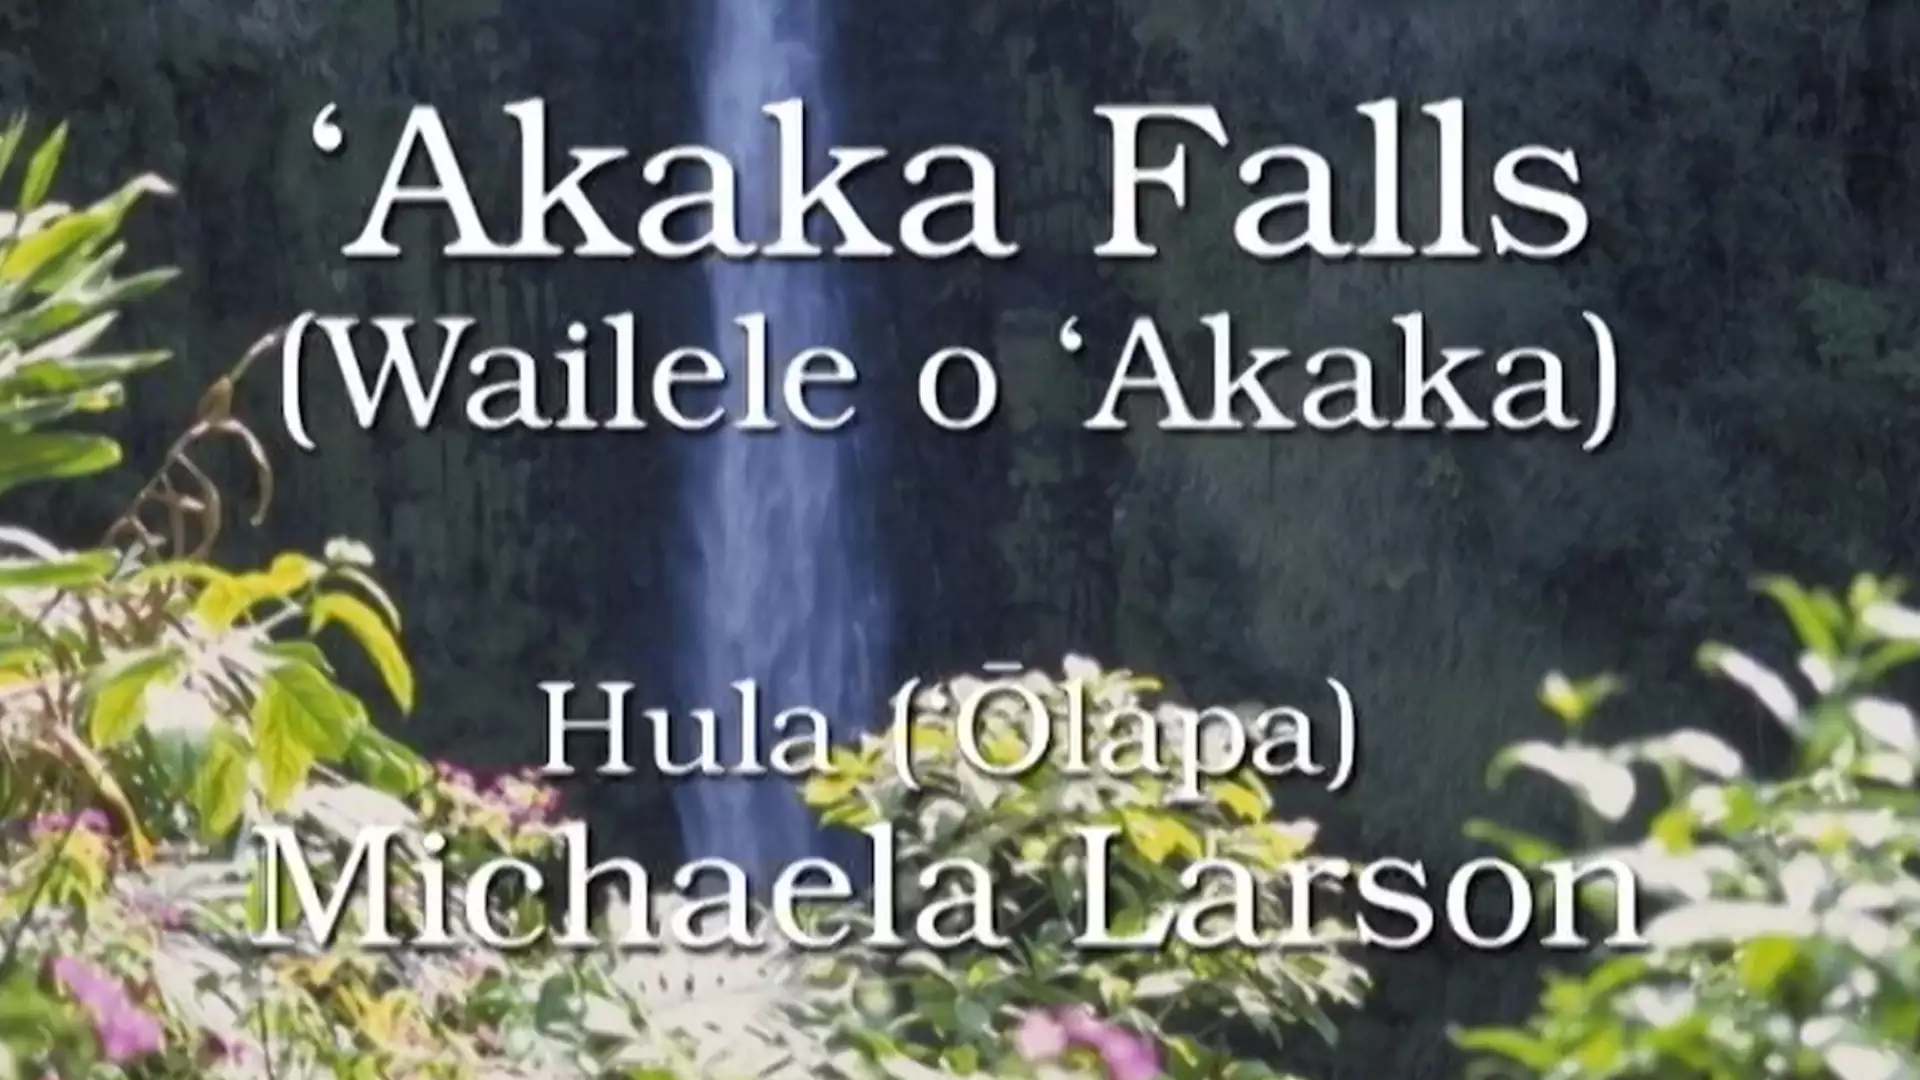 AKAKA FALLS (WAILELE O 'AKAKA)